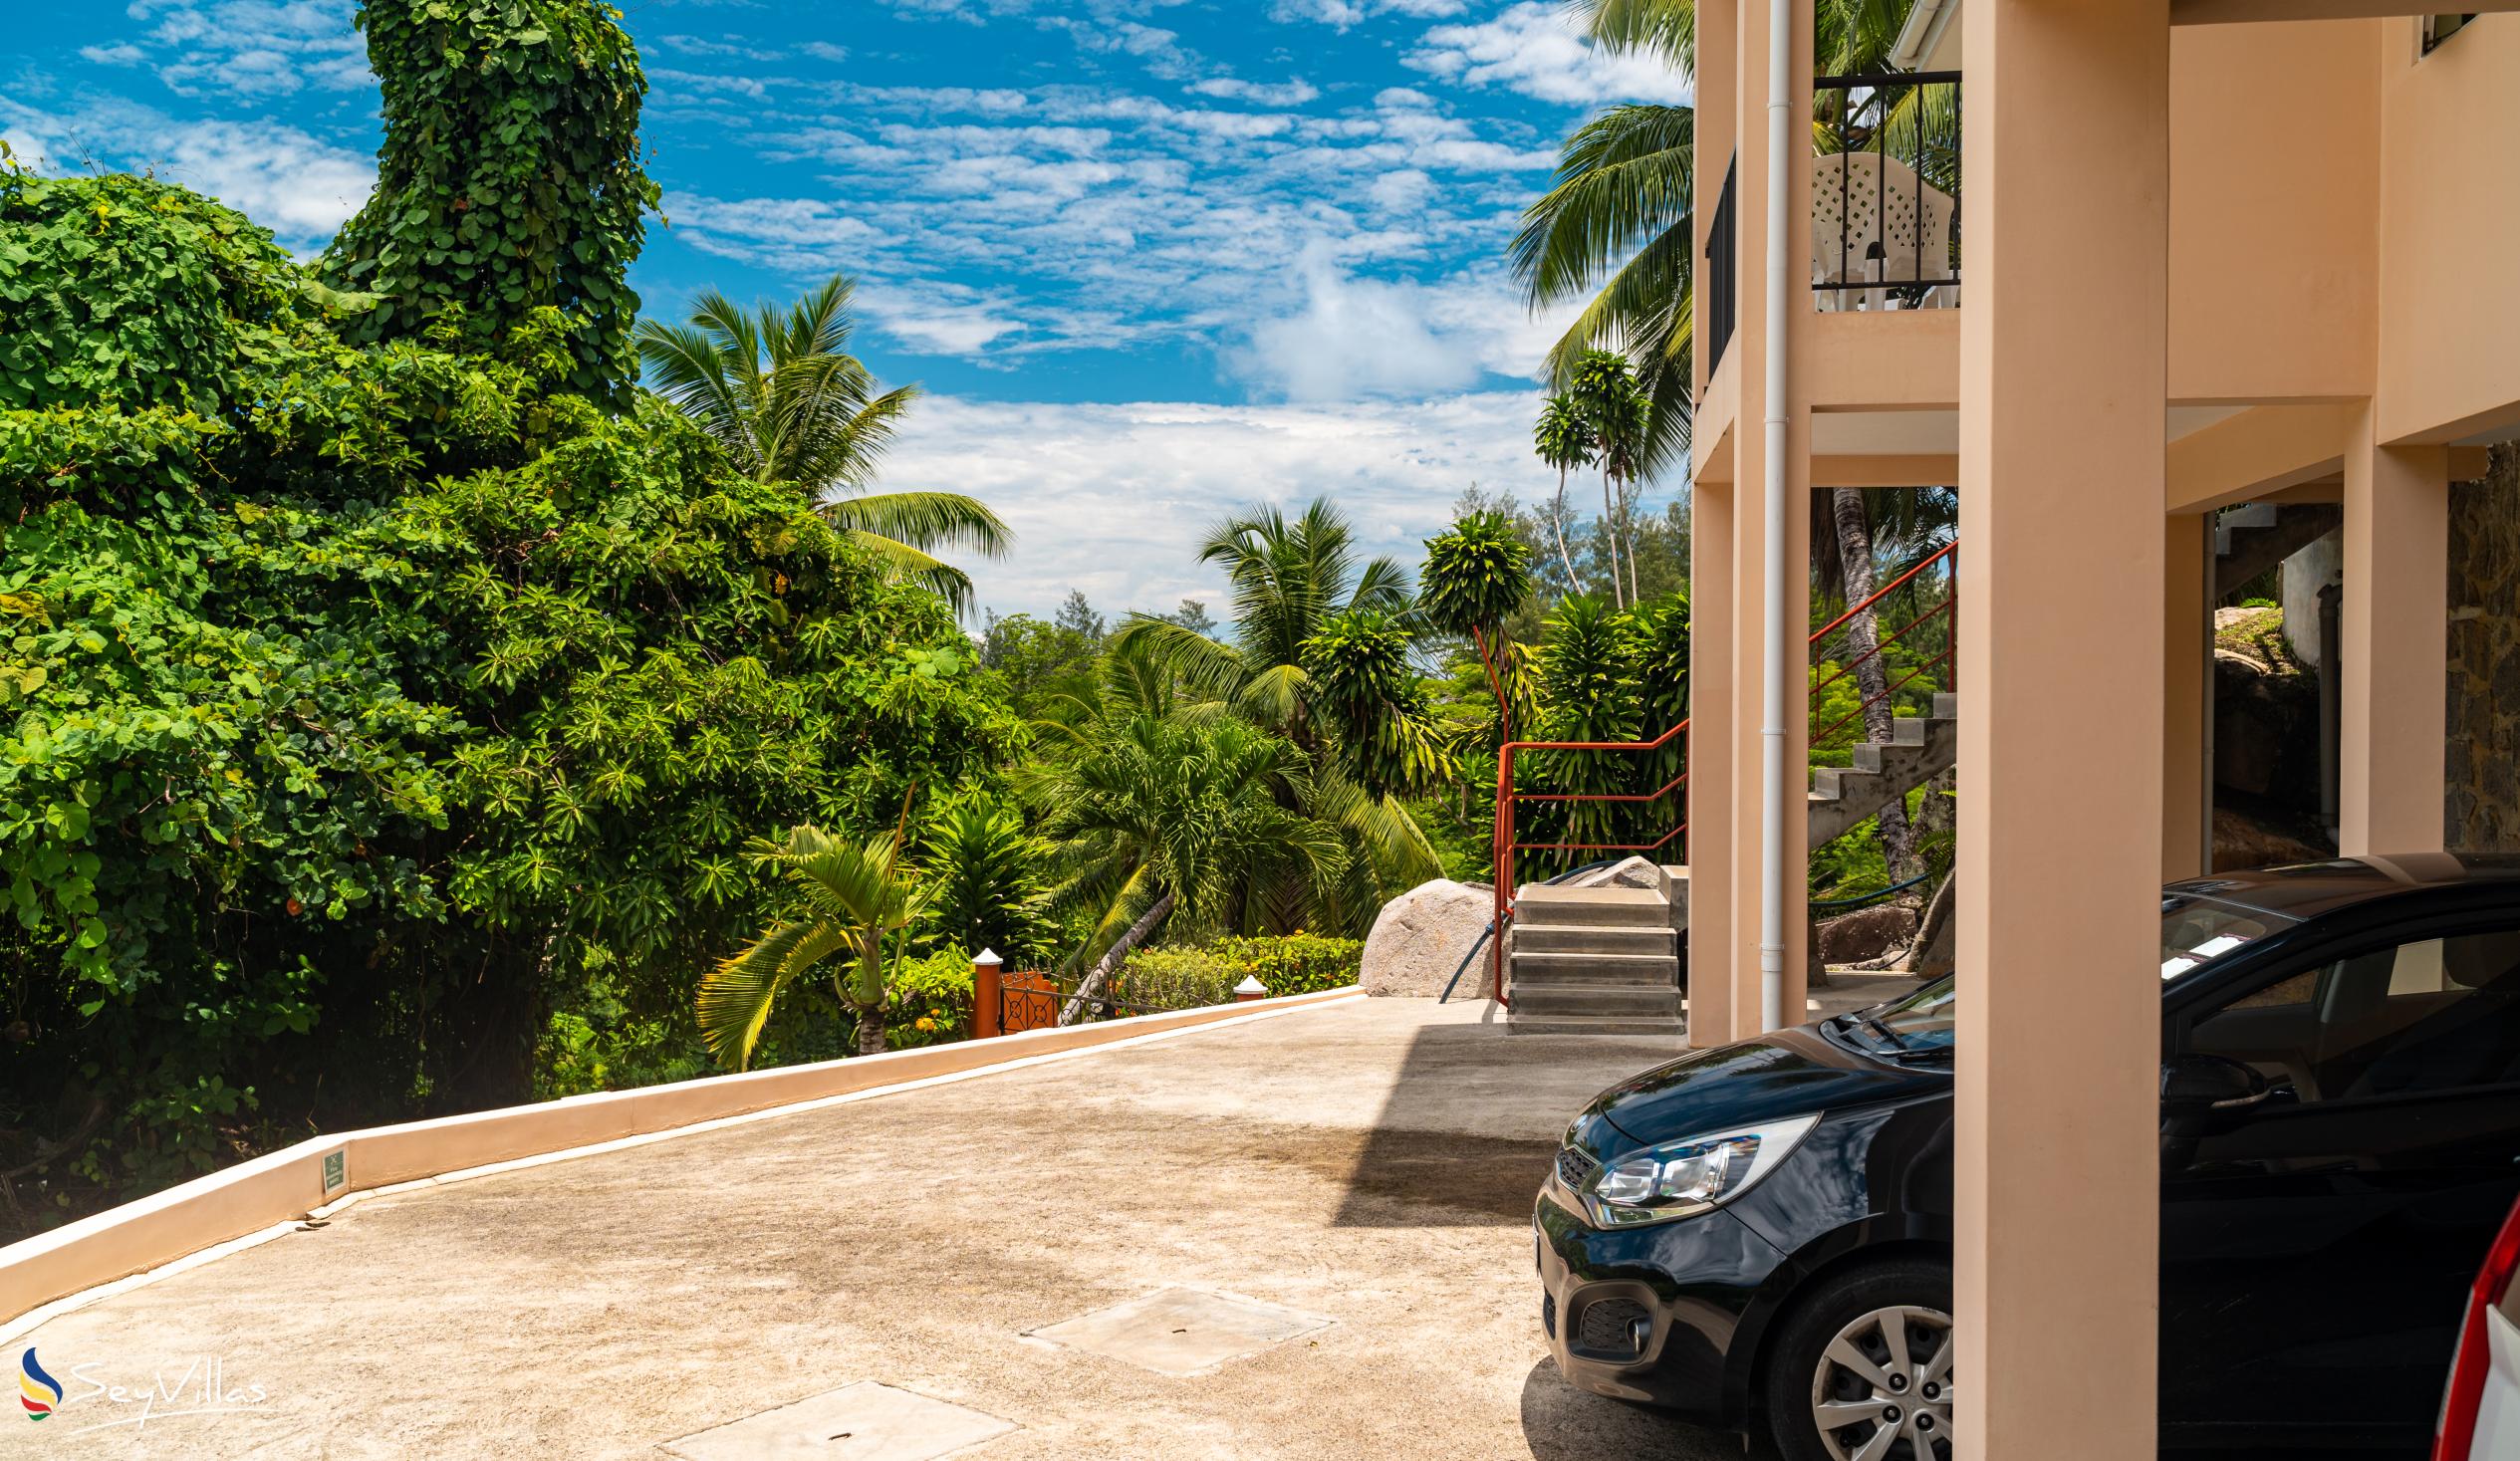 Photo 16: JAIDSS Holiday Apartments - Outdoor area - Mahé (Seychelles)